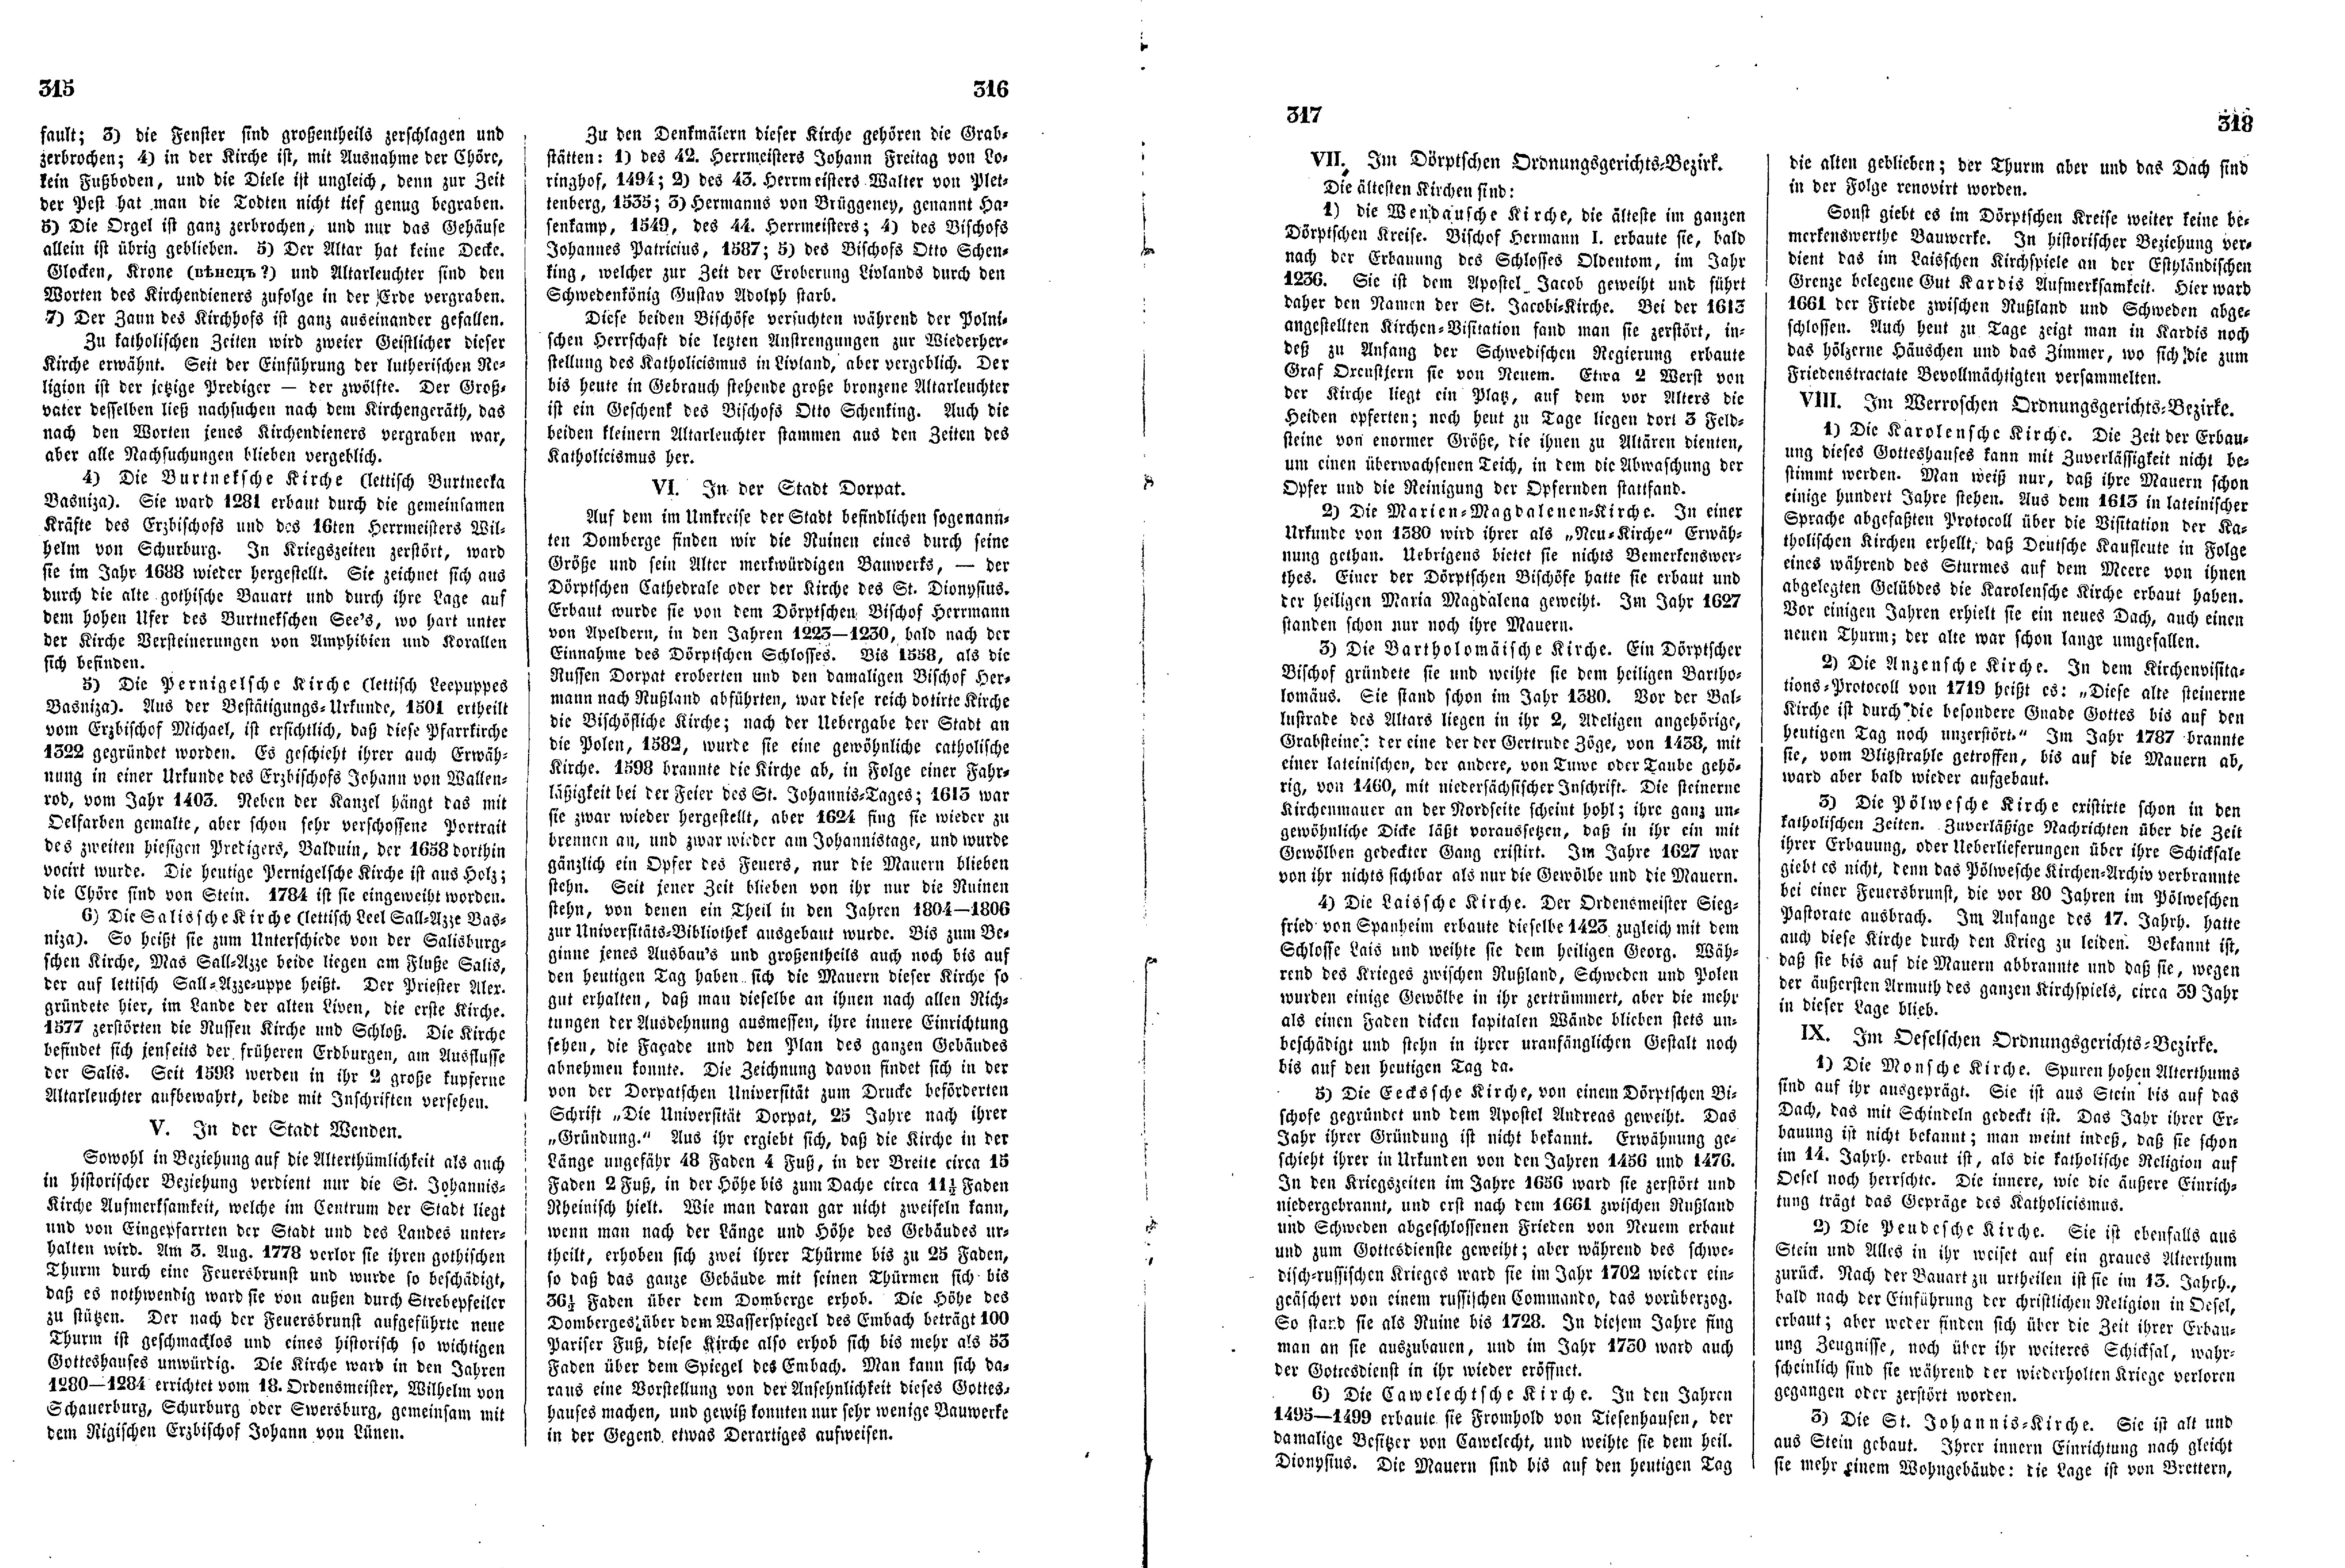 Das Inland [12] (1847) | 84. (315-318) Main body of text